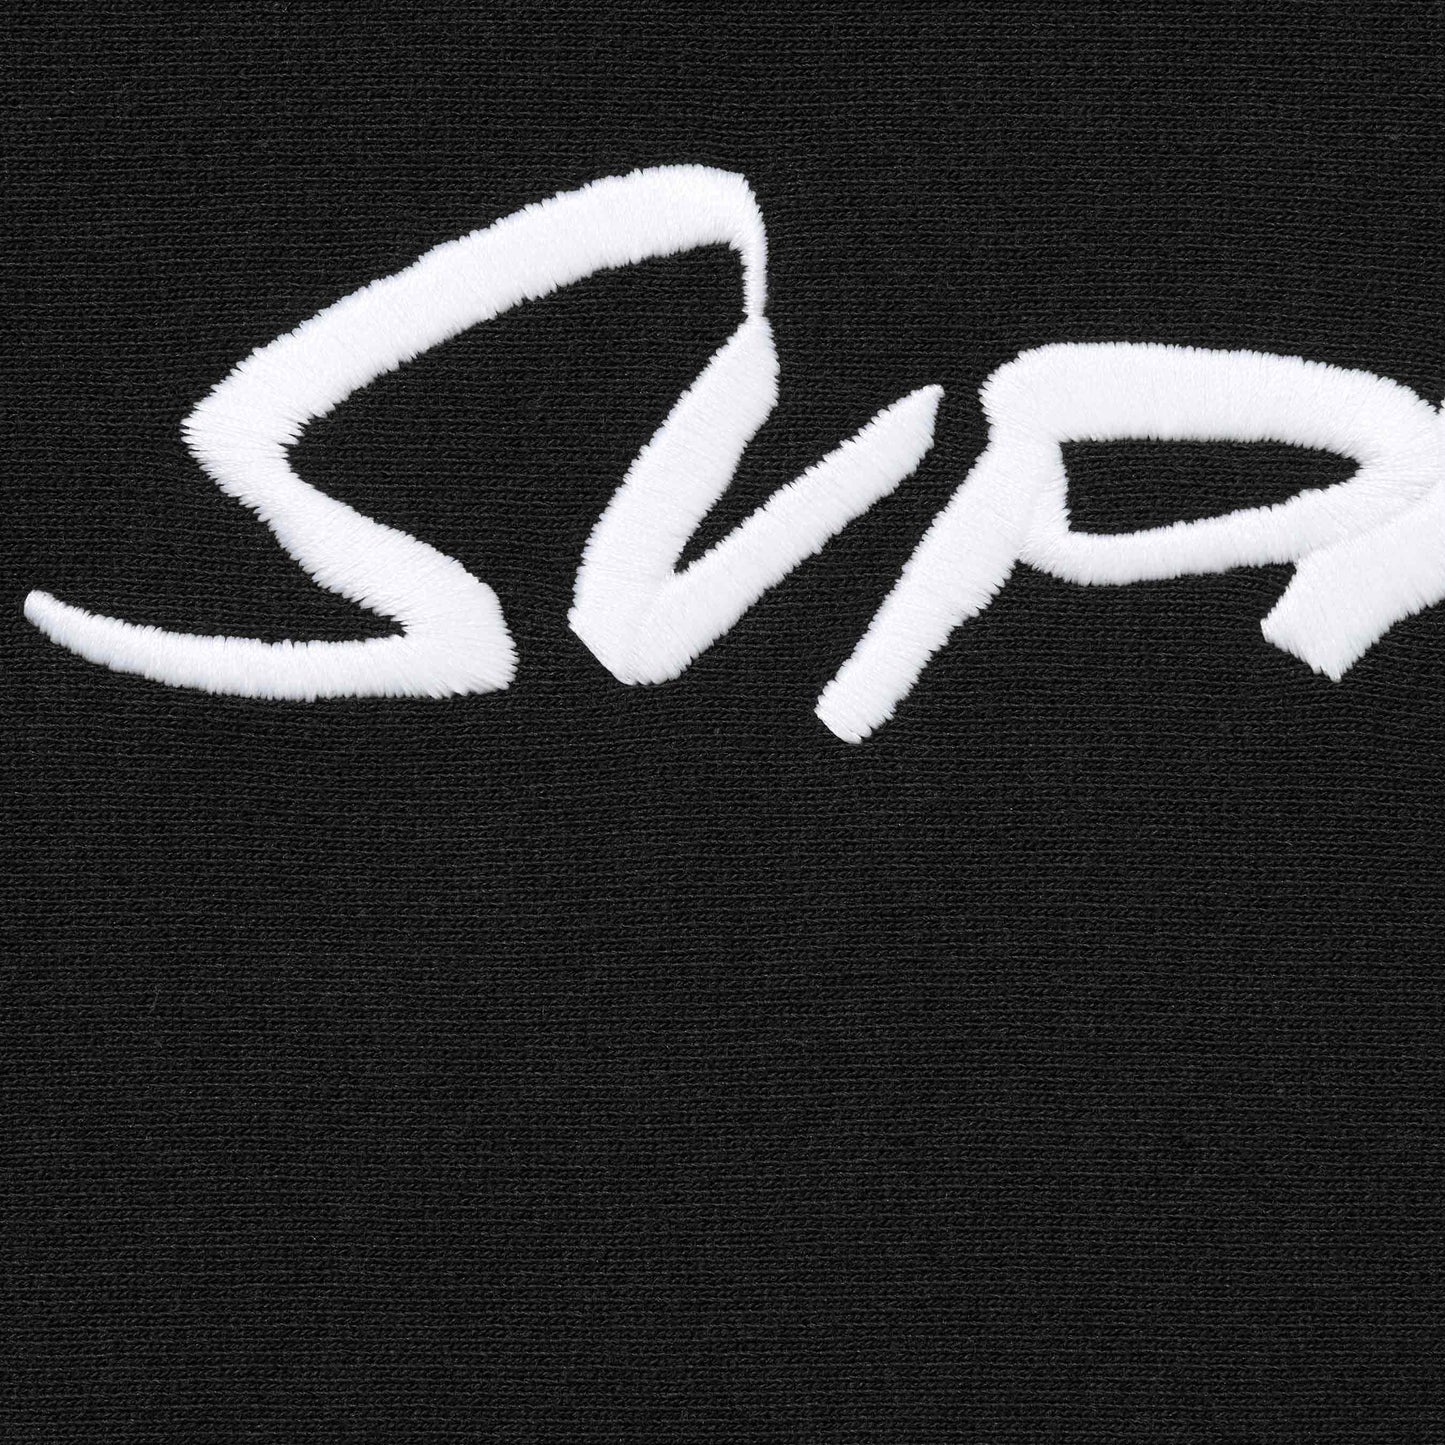 Supreme Futura Hooded Sweatshirt "Black"